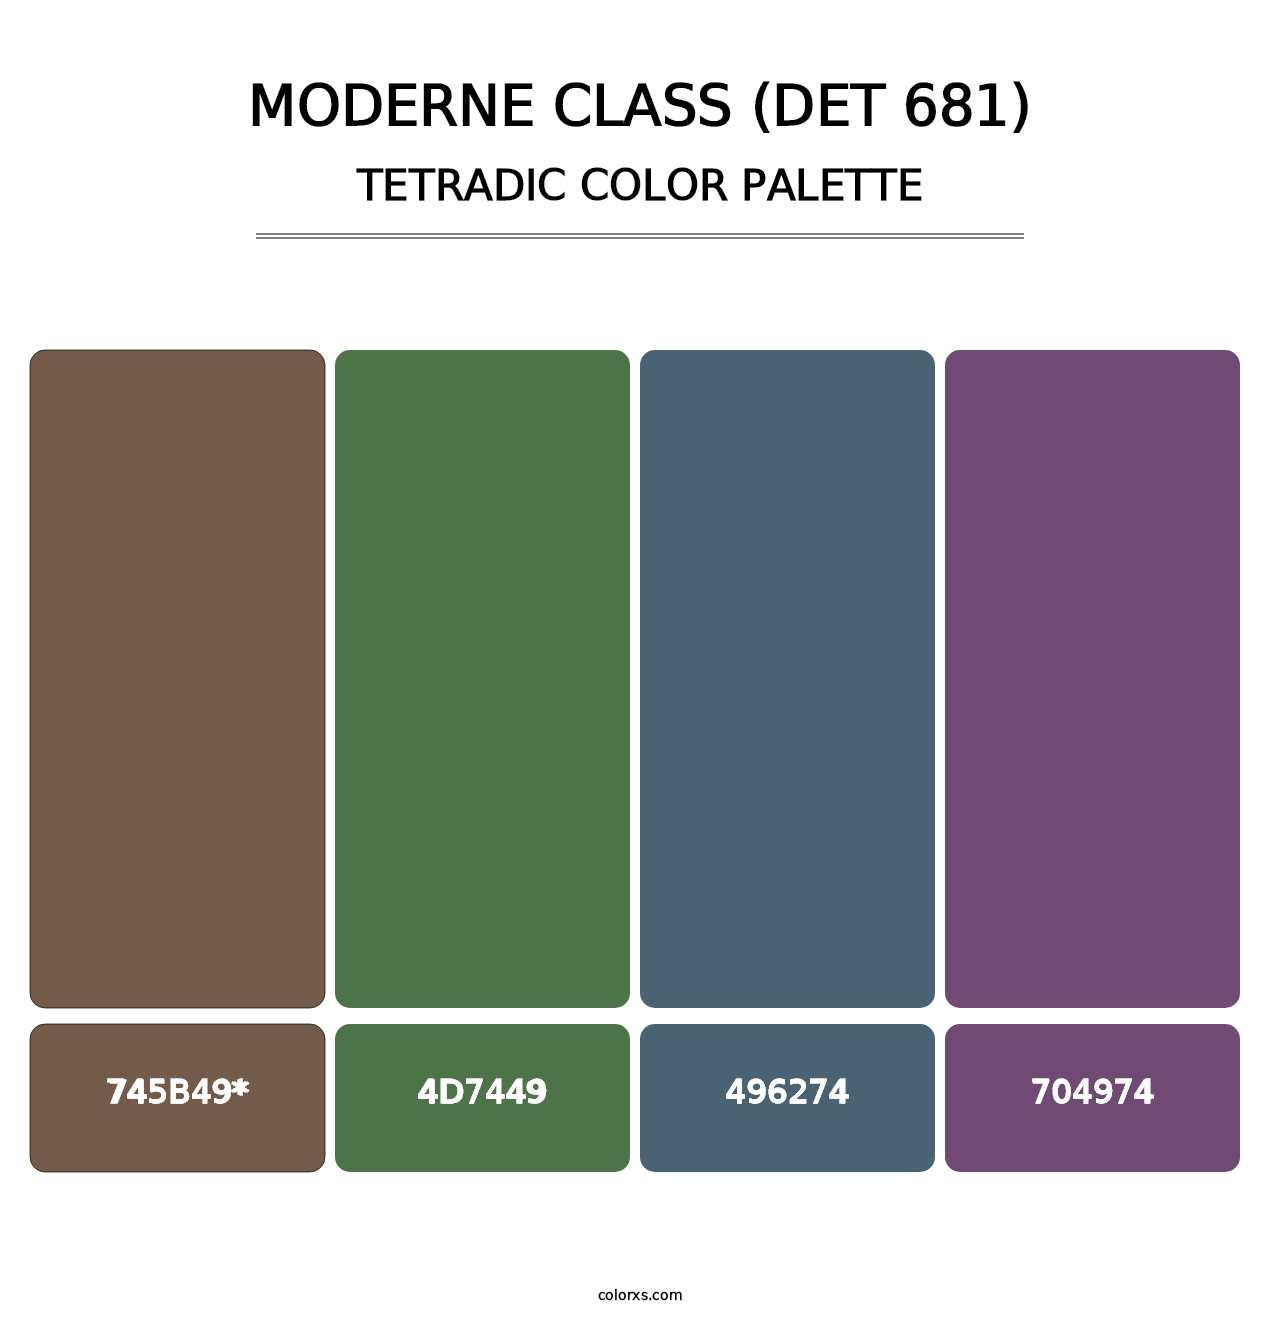 Moderne Class (DET 681) - Tetradic Color Palette